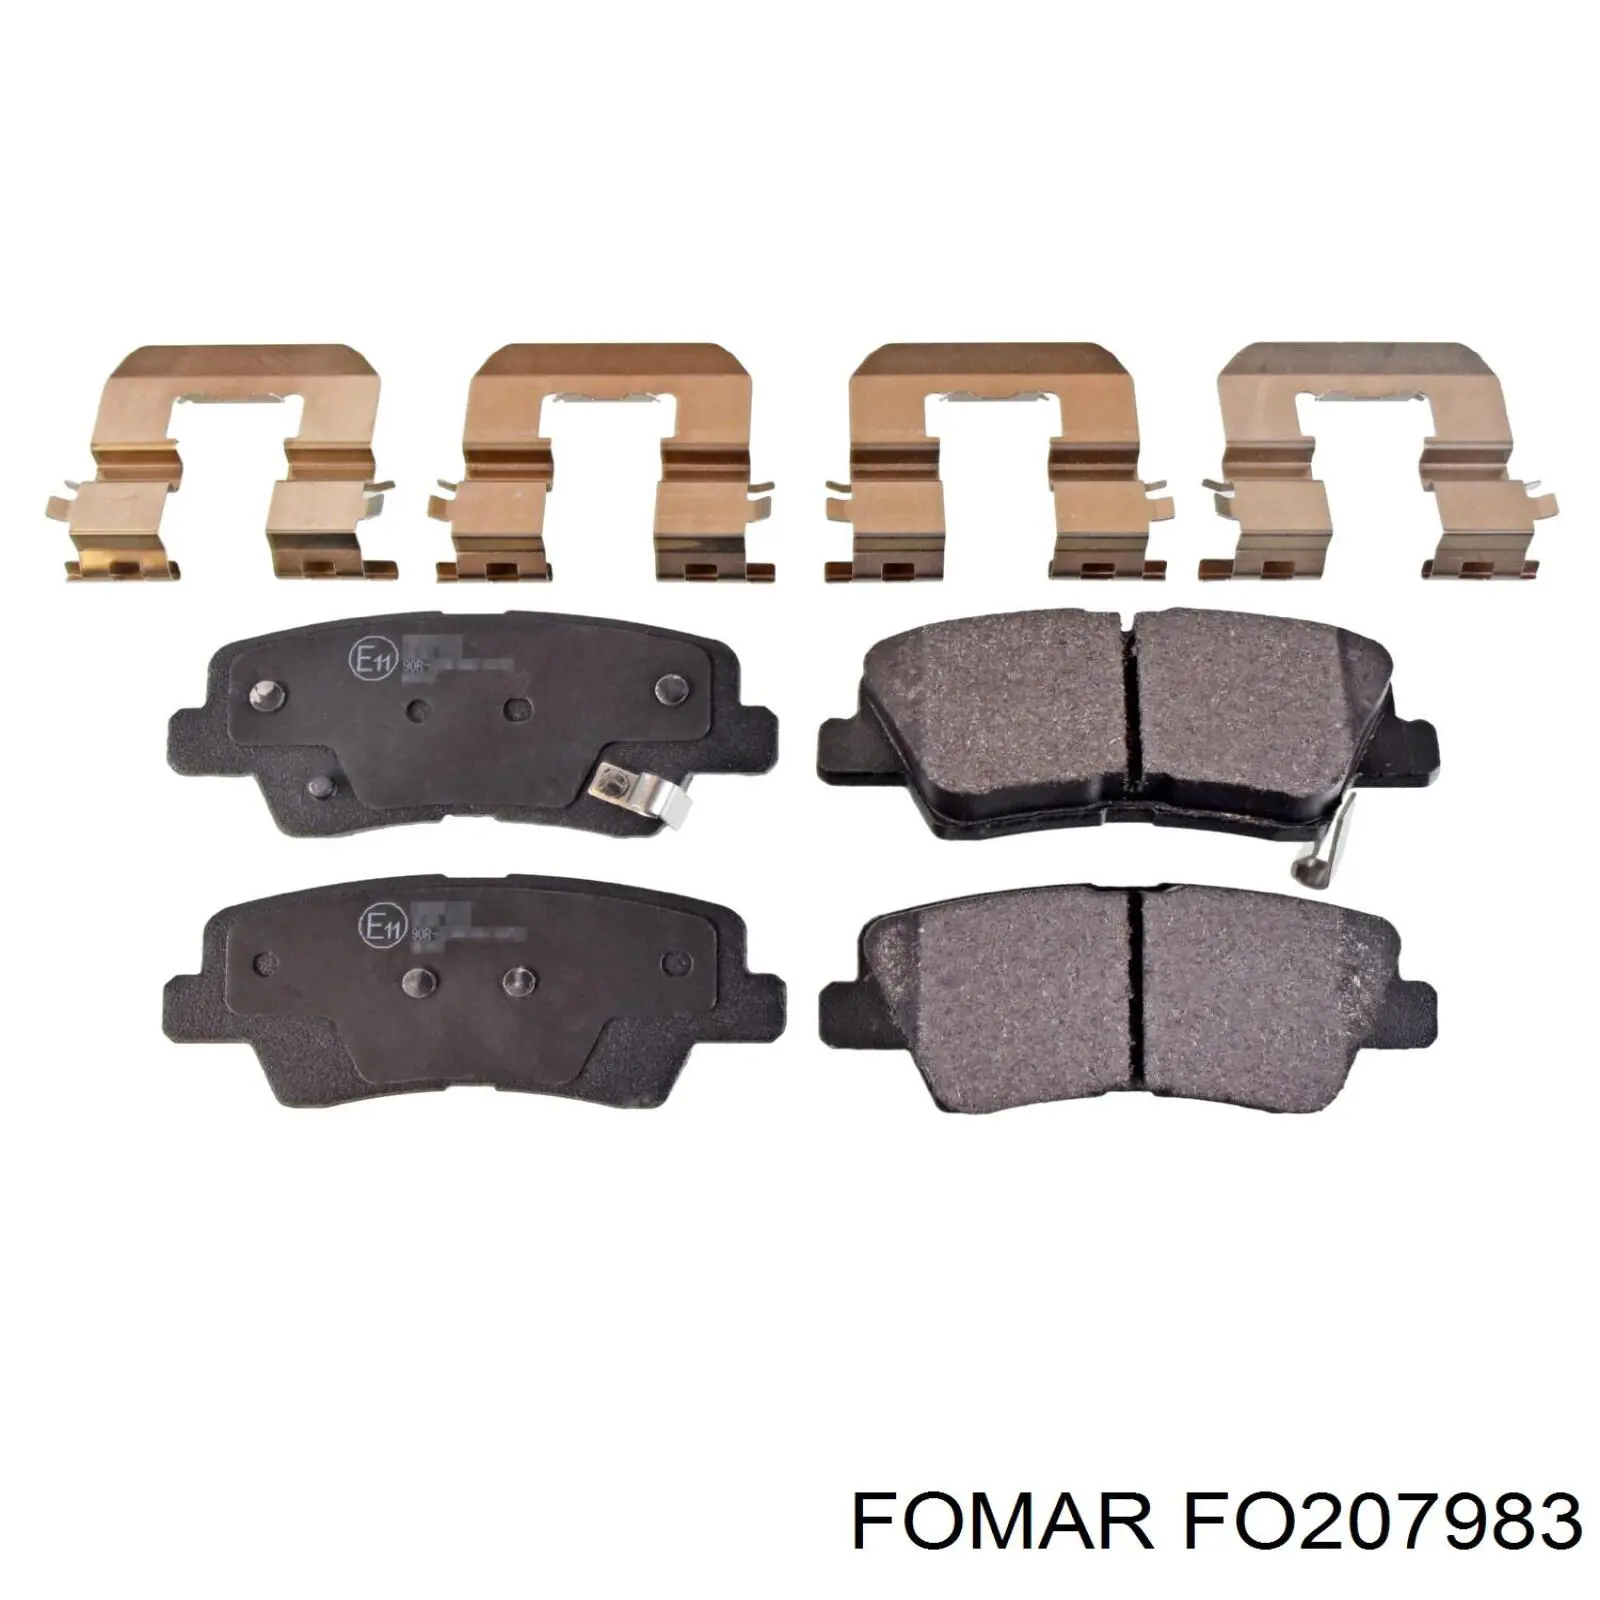 FO207983 Fomar Roulunds Задние колодки (AKEBONO, Электрический ручной тормоз)